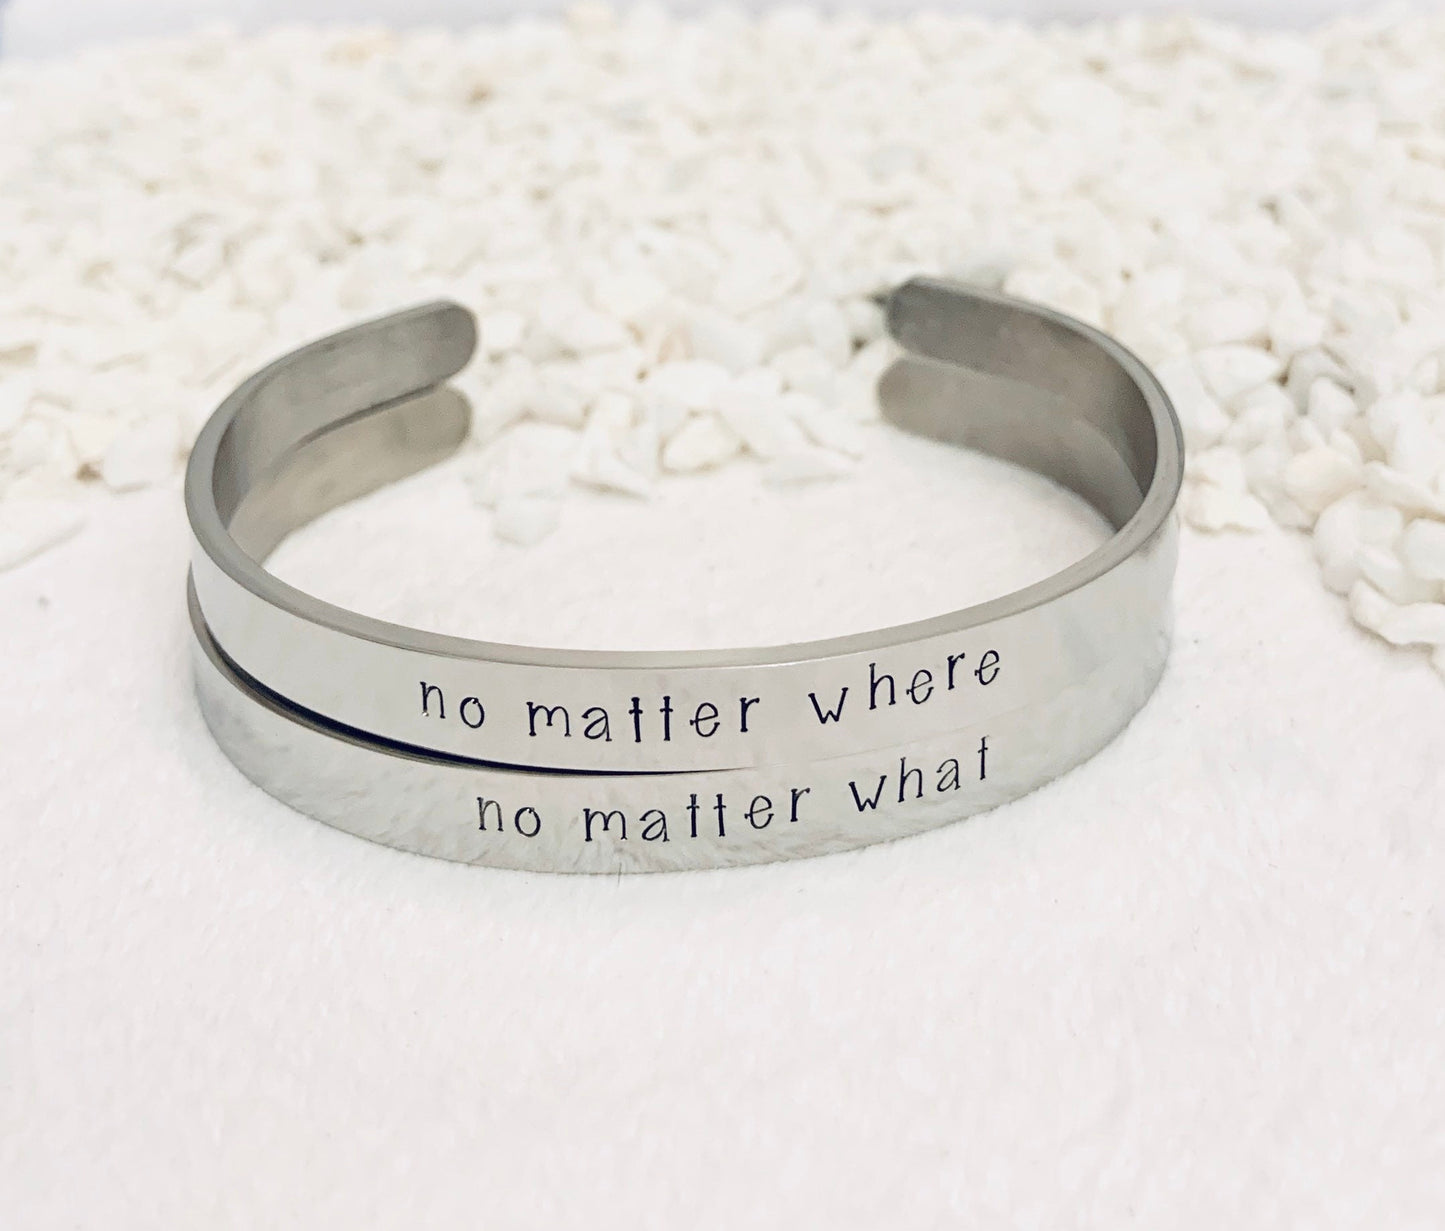 No matter where | No matter what - Cuff Bracelets